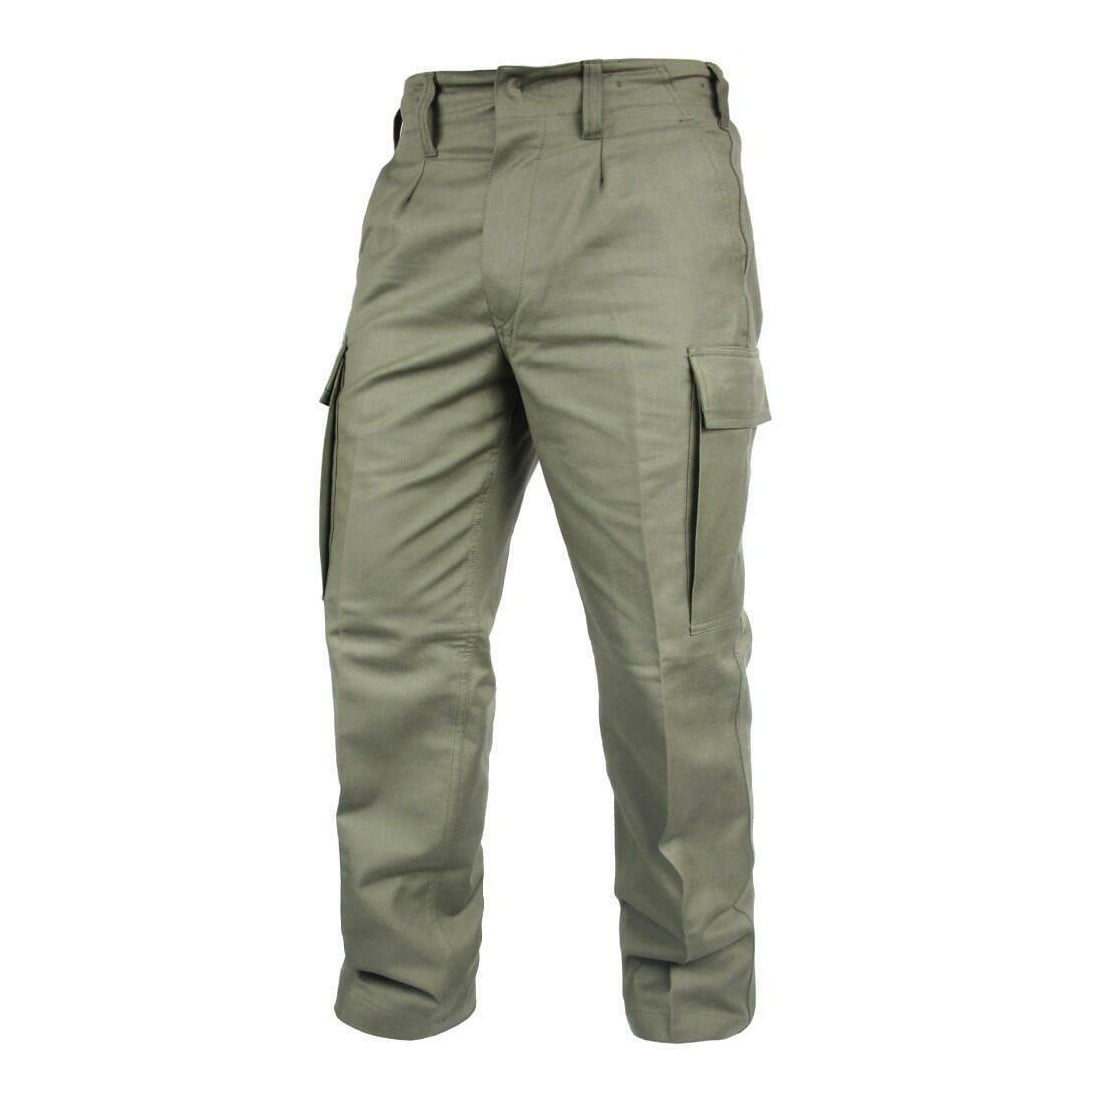 Moleskin army trousers